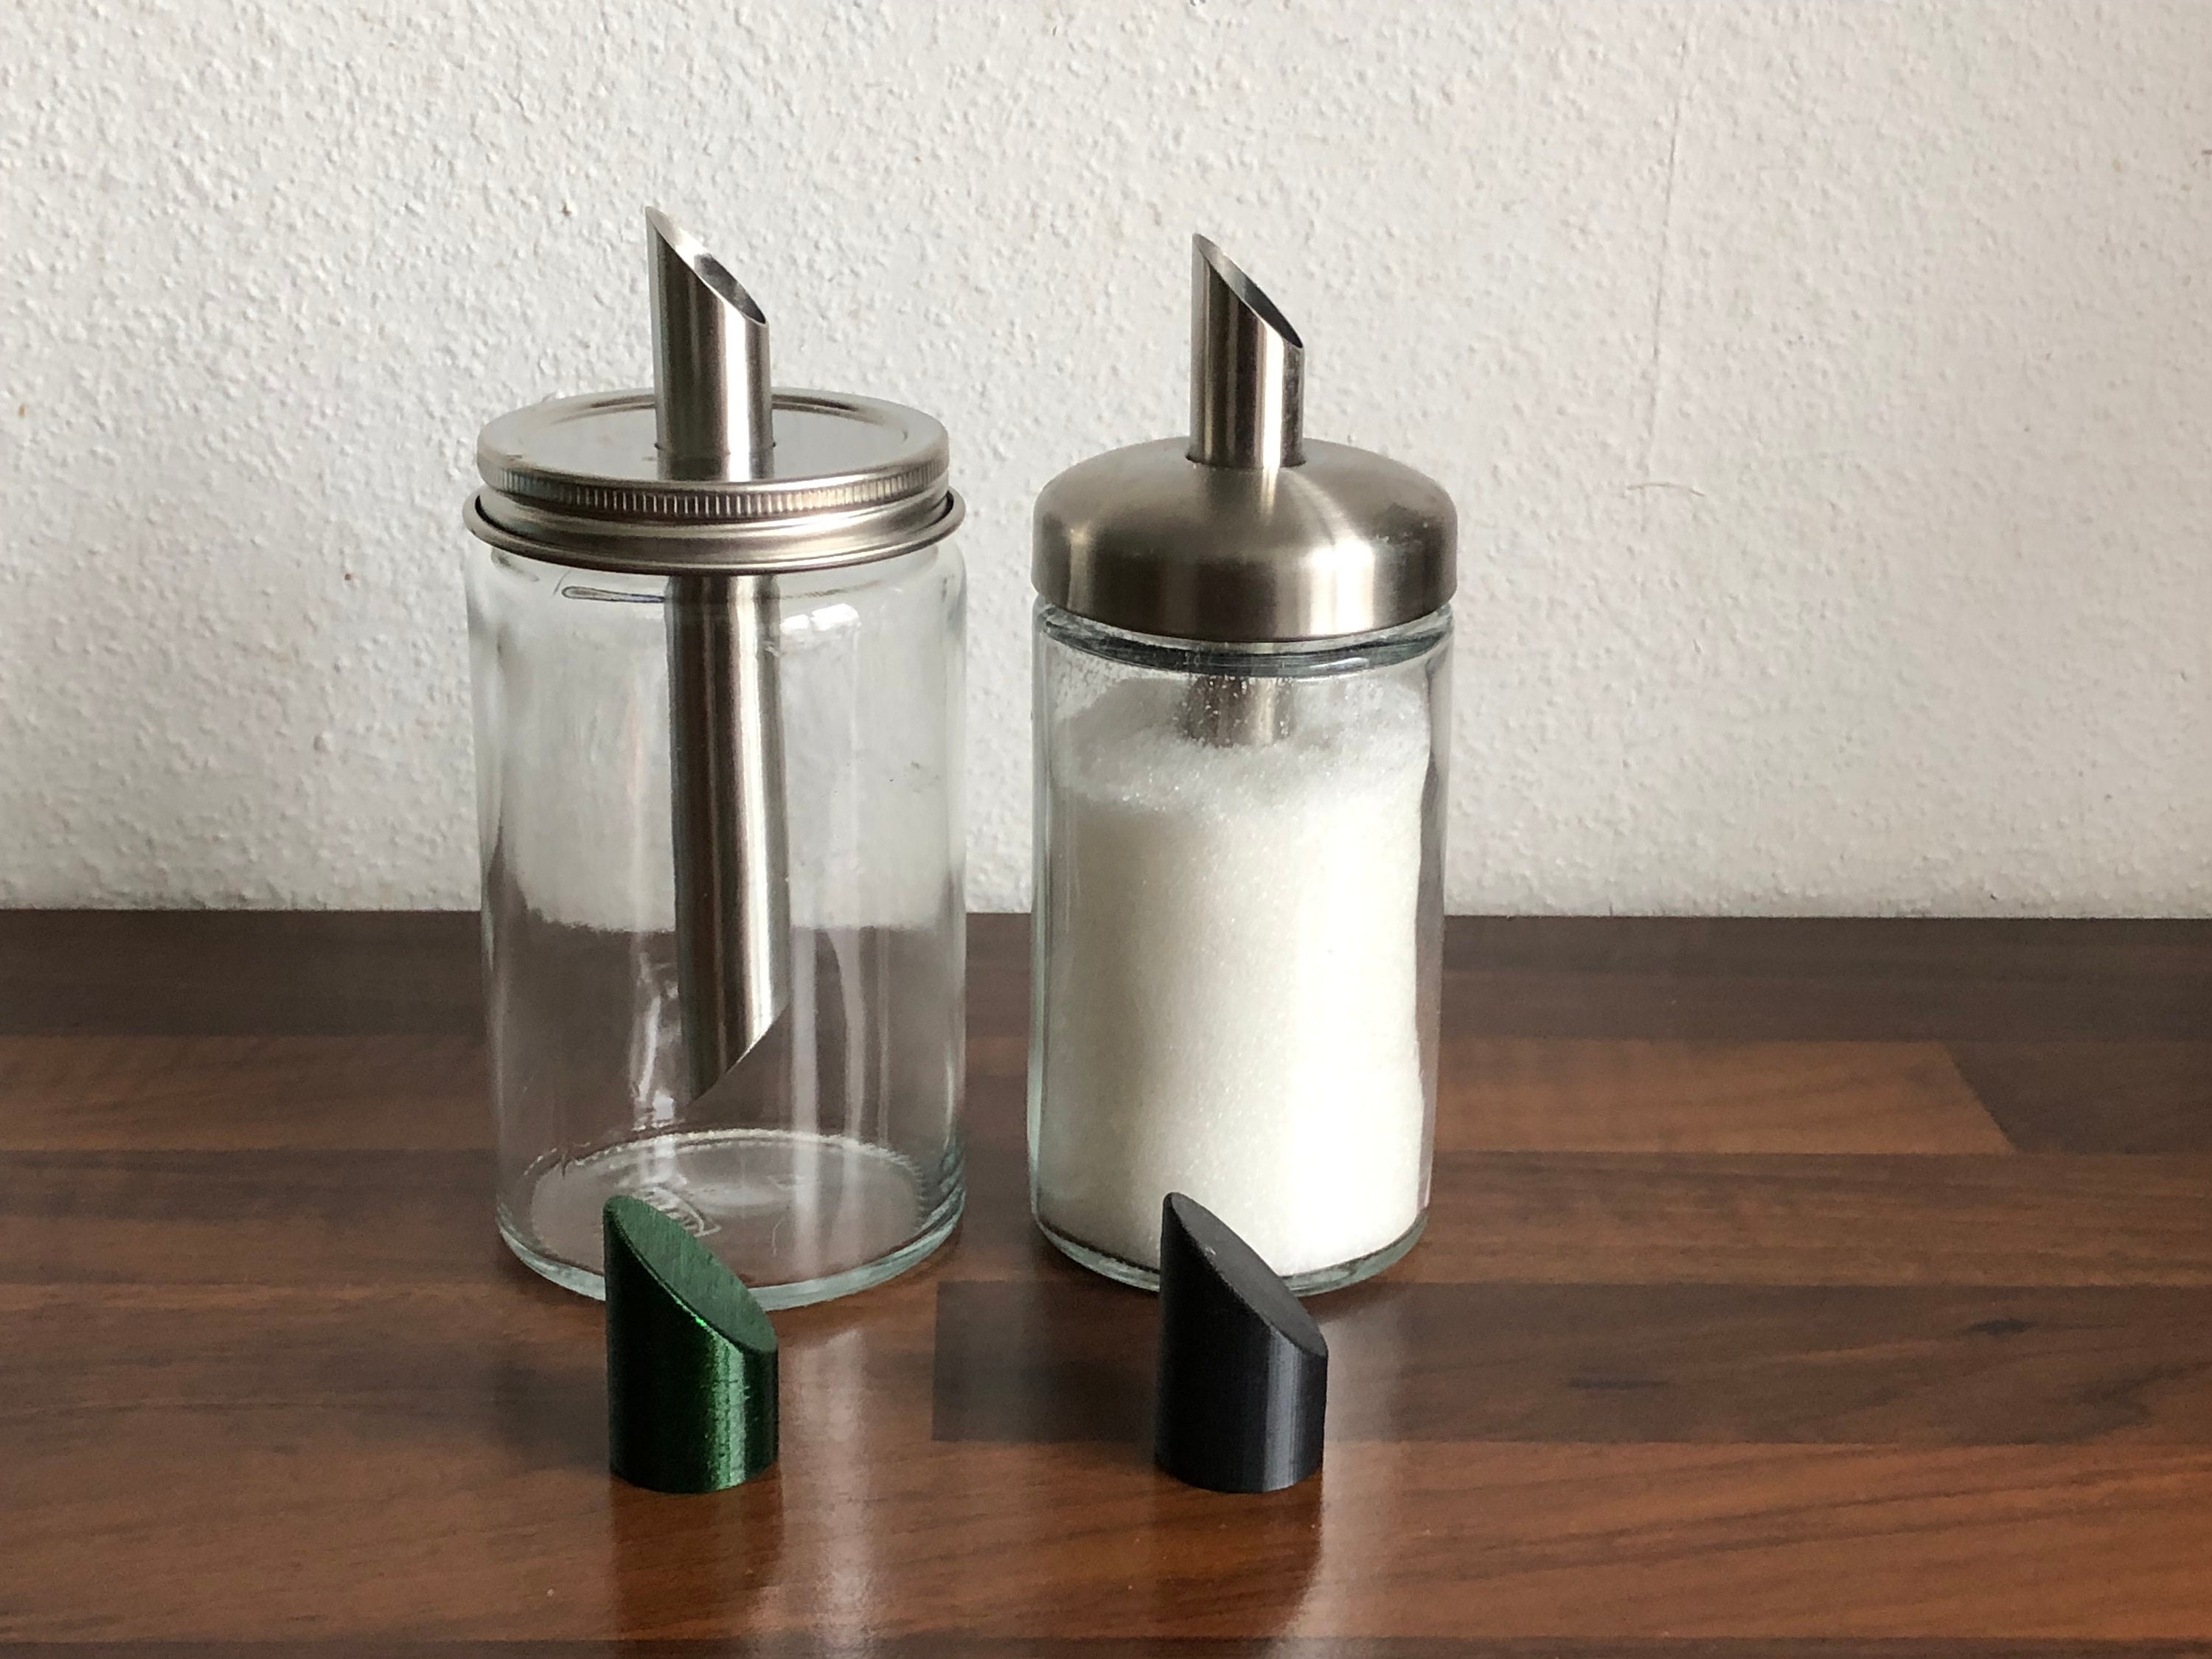 PLATS Salt & pepper shaker, set of 2, stainless steel - IKEA